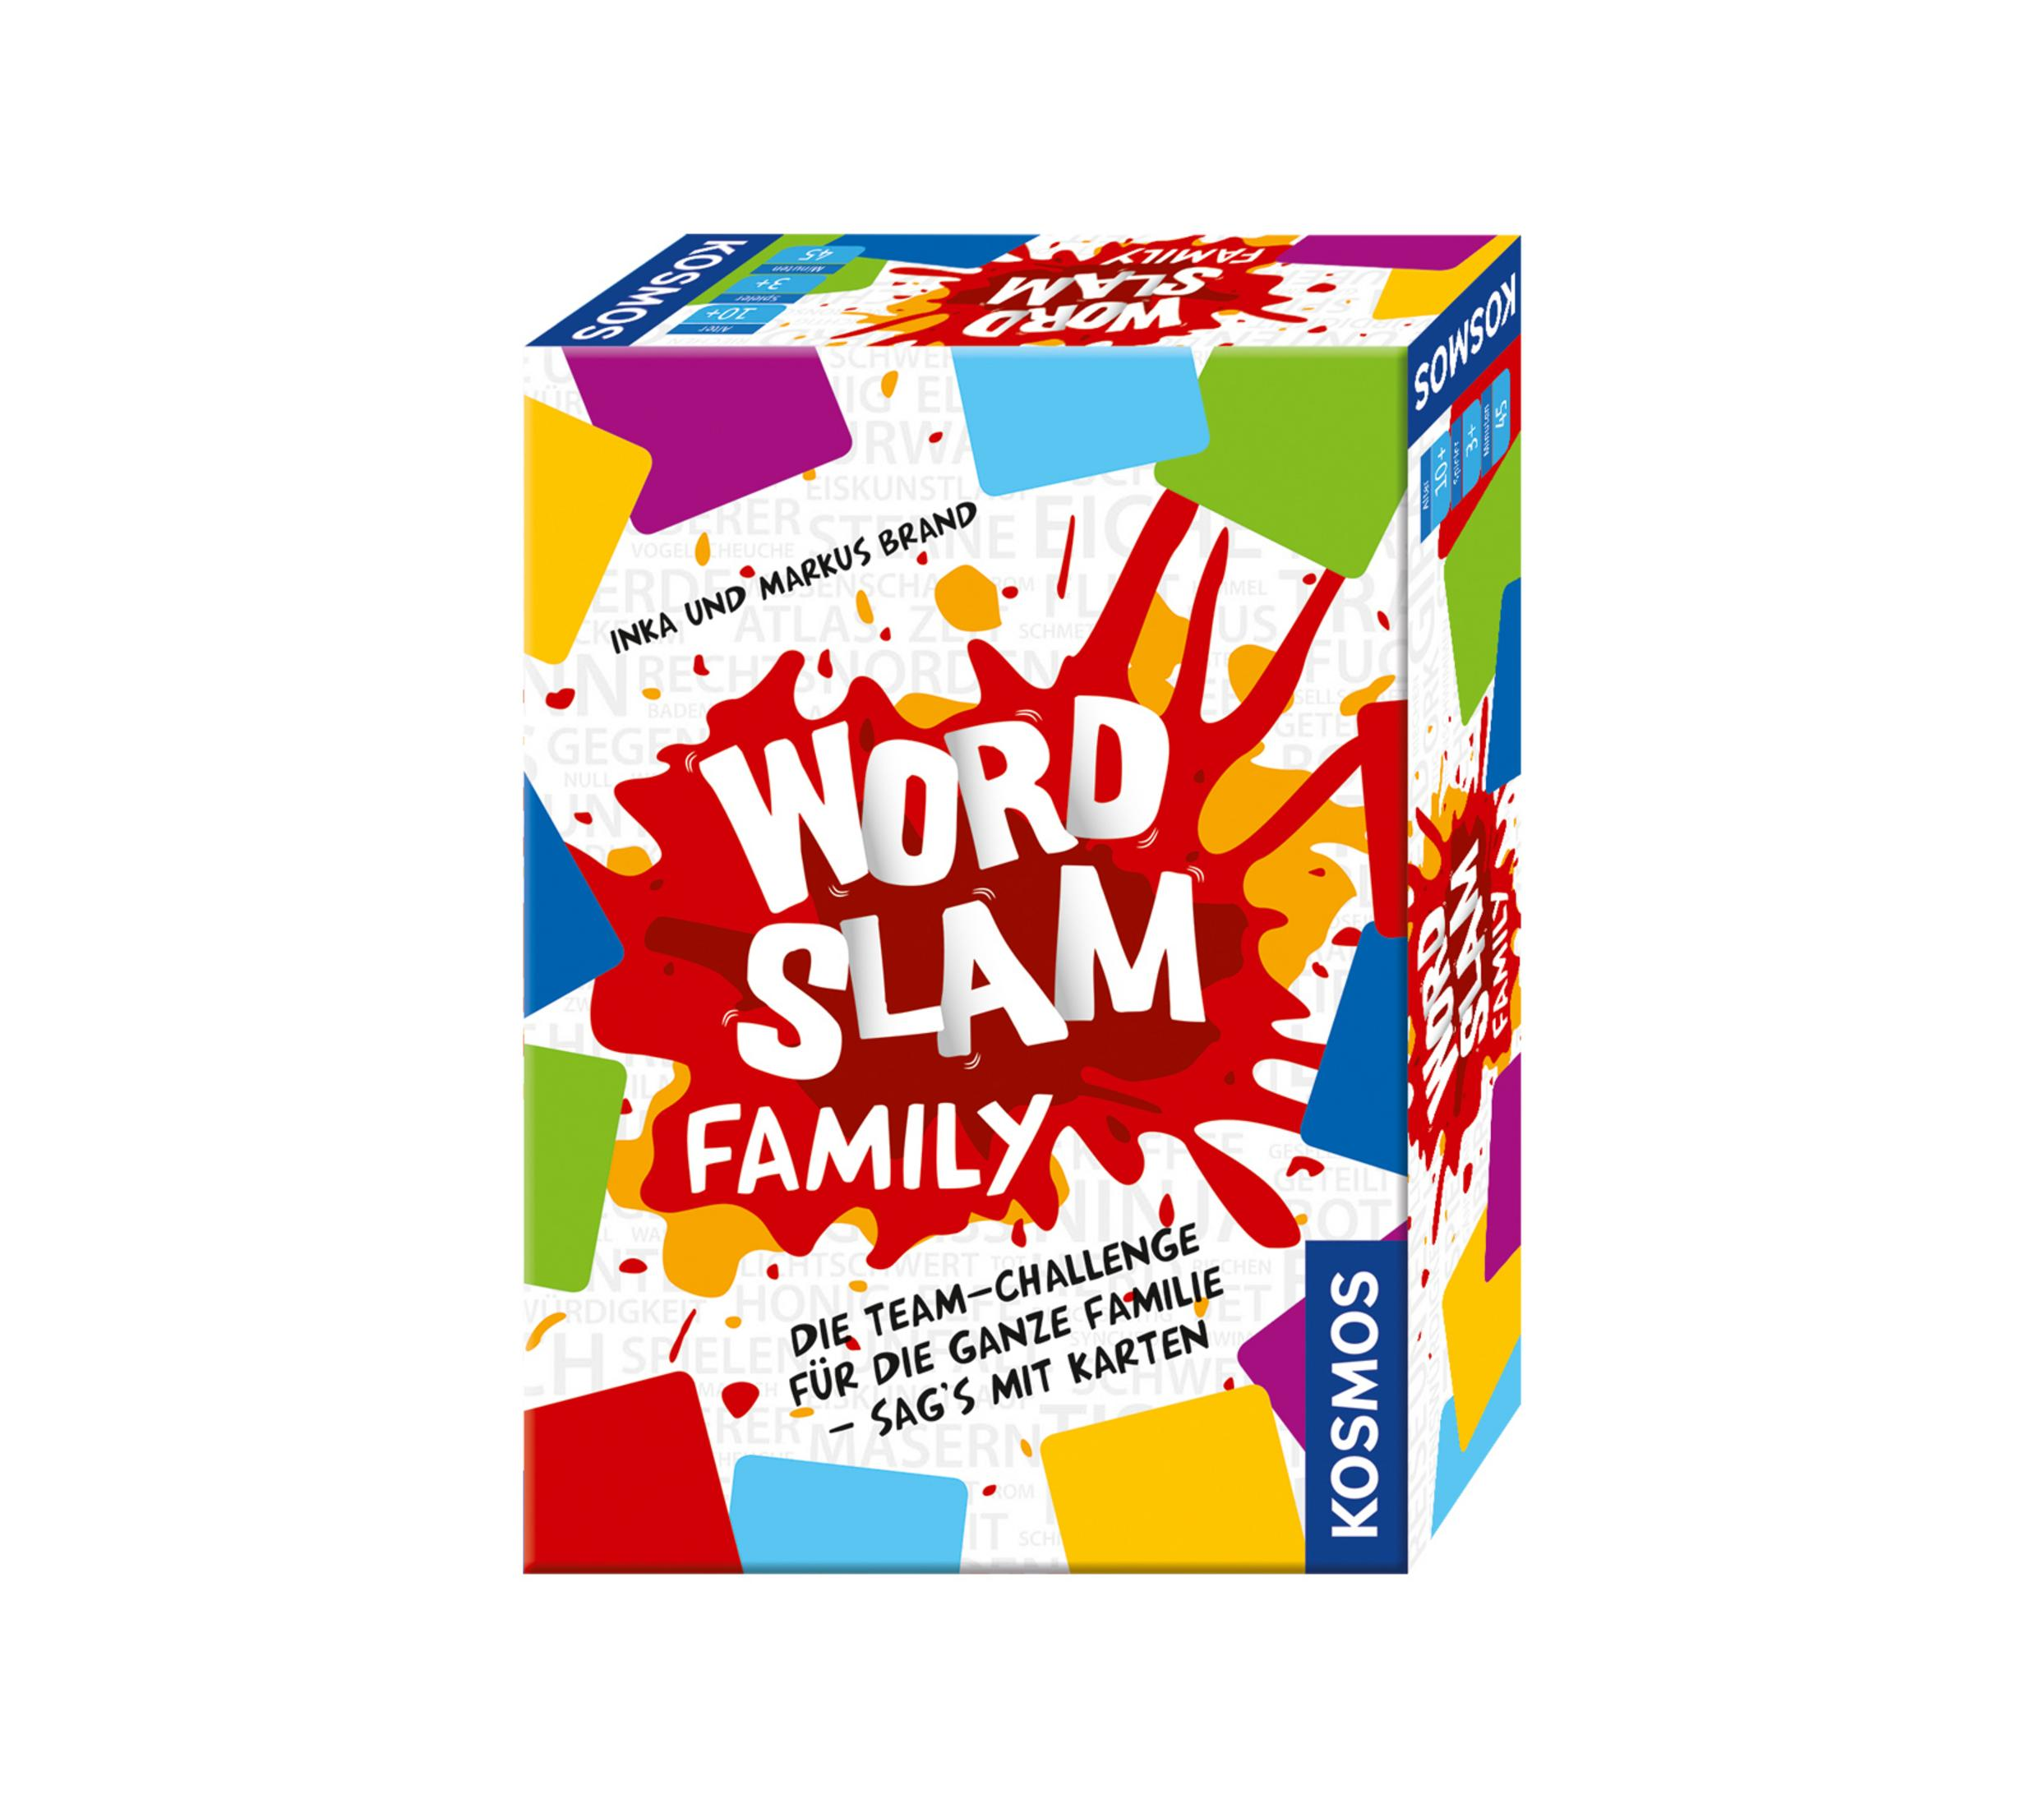 SLAM Kartenspiel FAMILY 691172 KOSMOS WORD